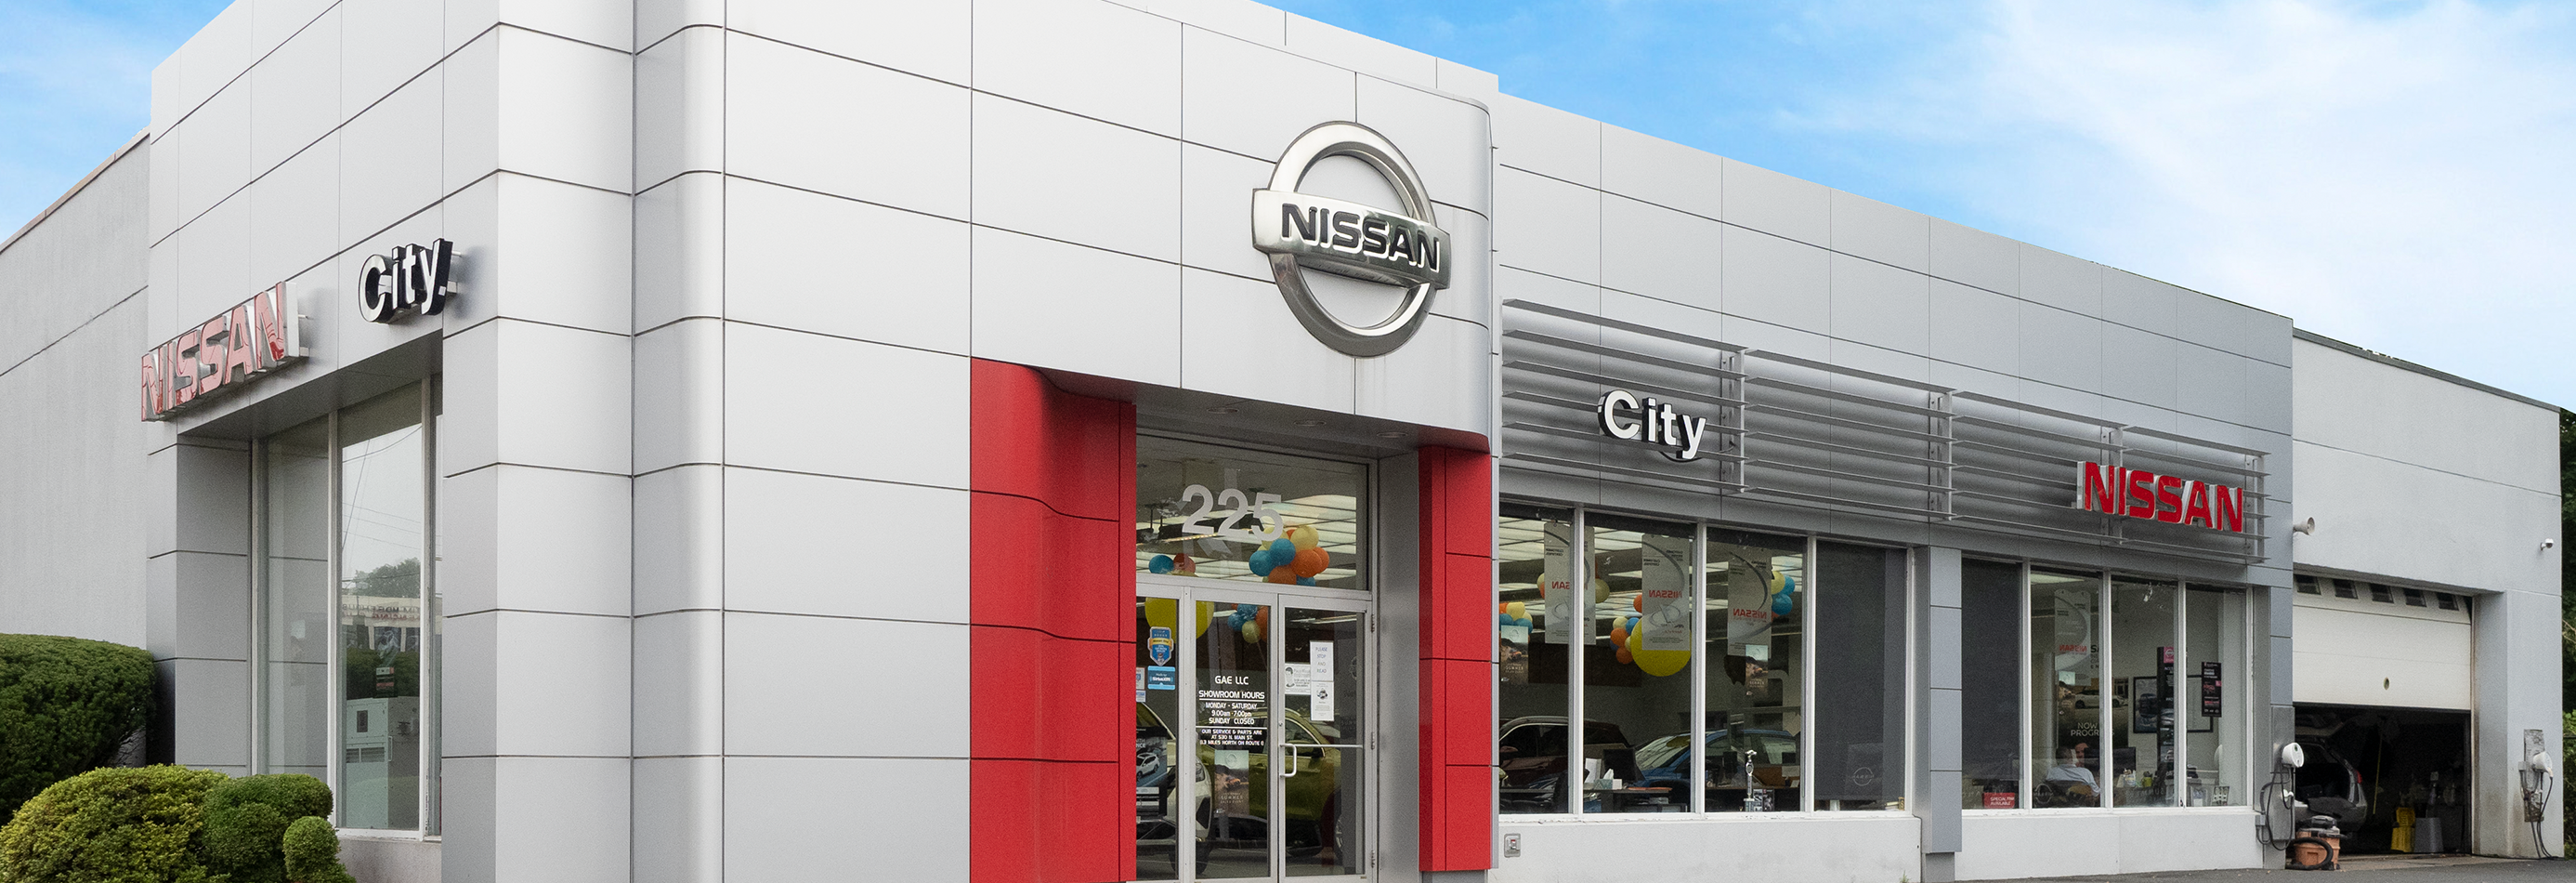 Nissan City serving Croton-on-Hudson NY